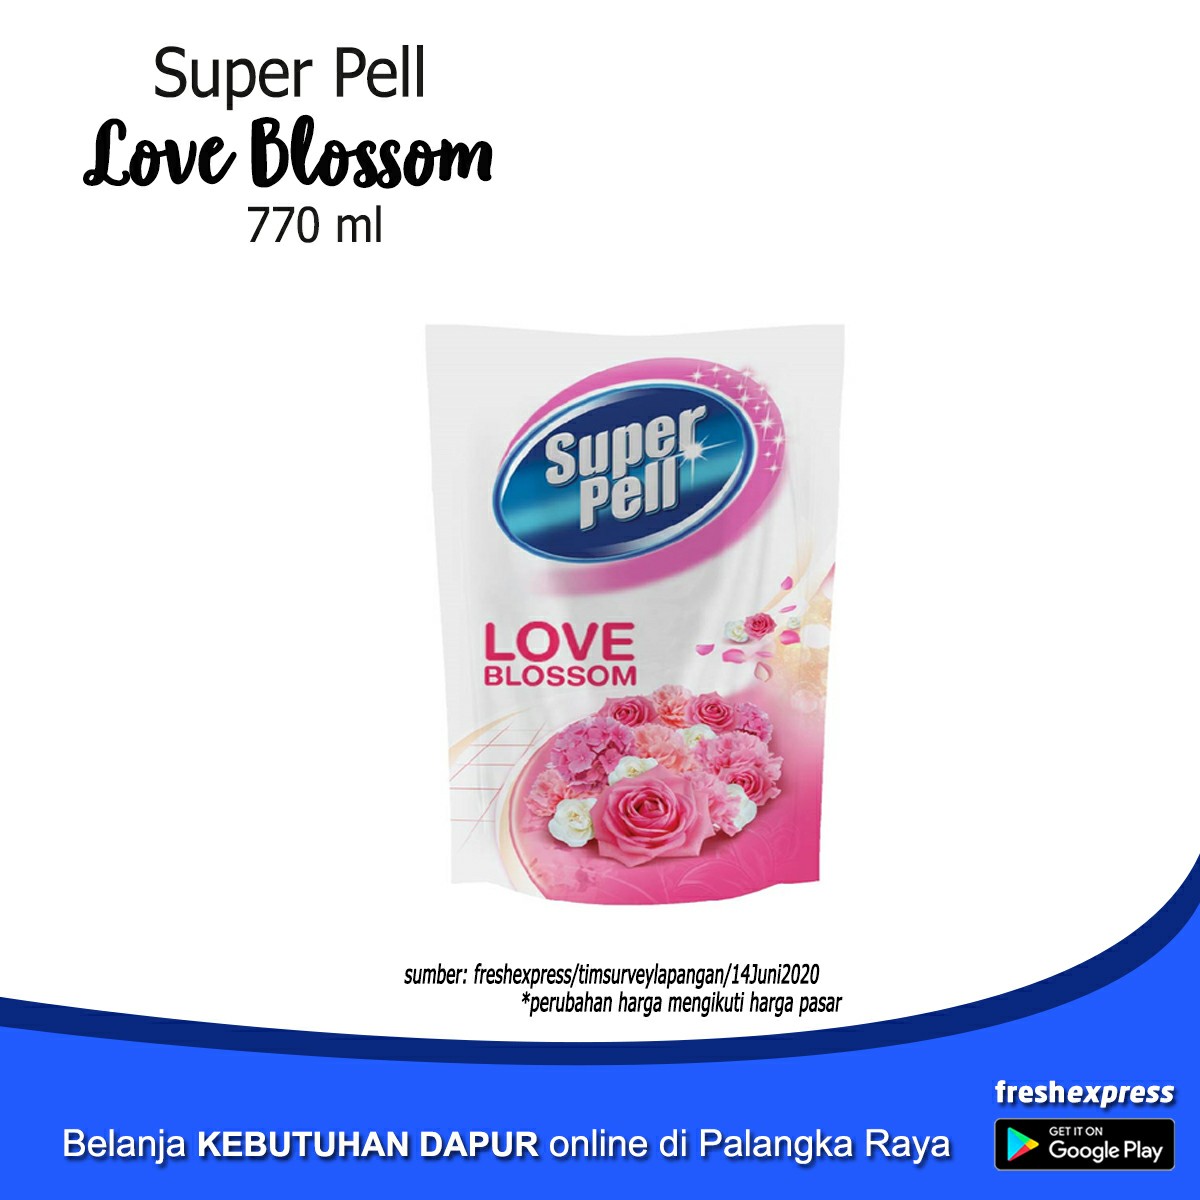 Super Pell Love Blossom